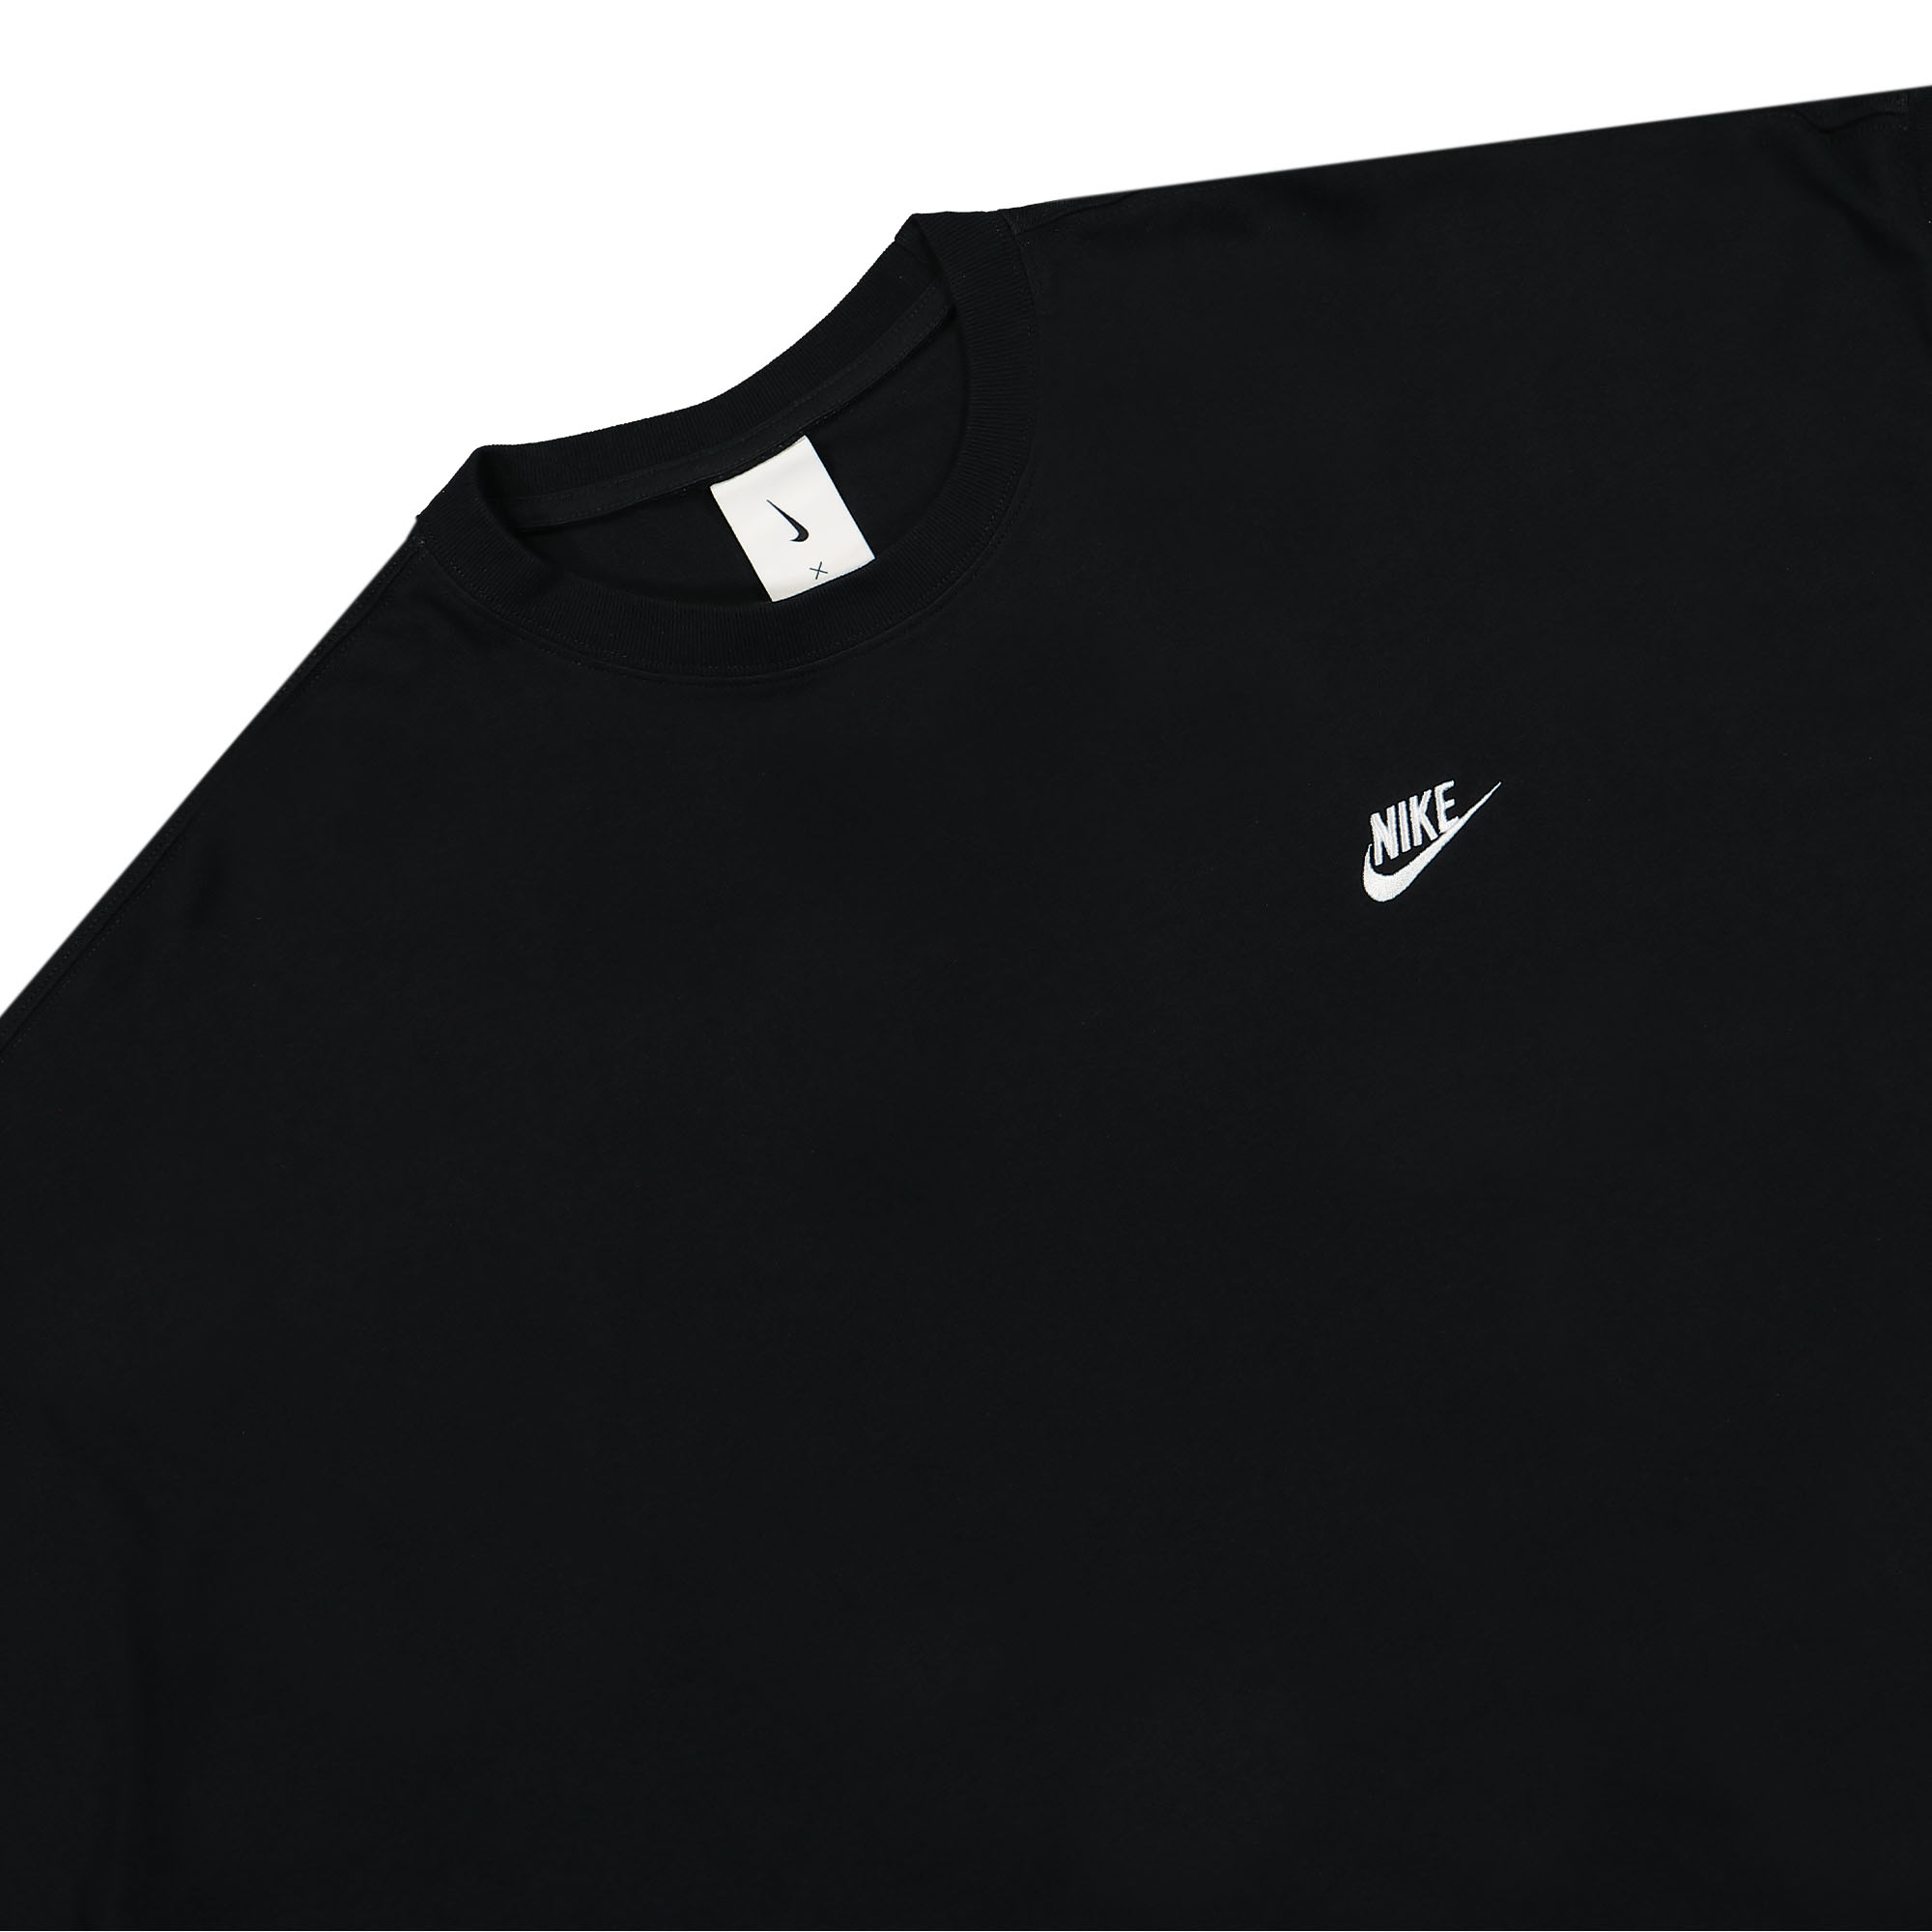 Nike - Peaceminusone x Nike G-Dragon Long Sleeve Tee | Overkill